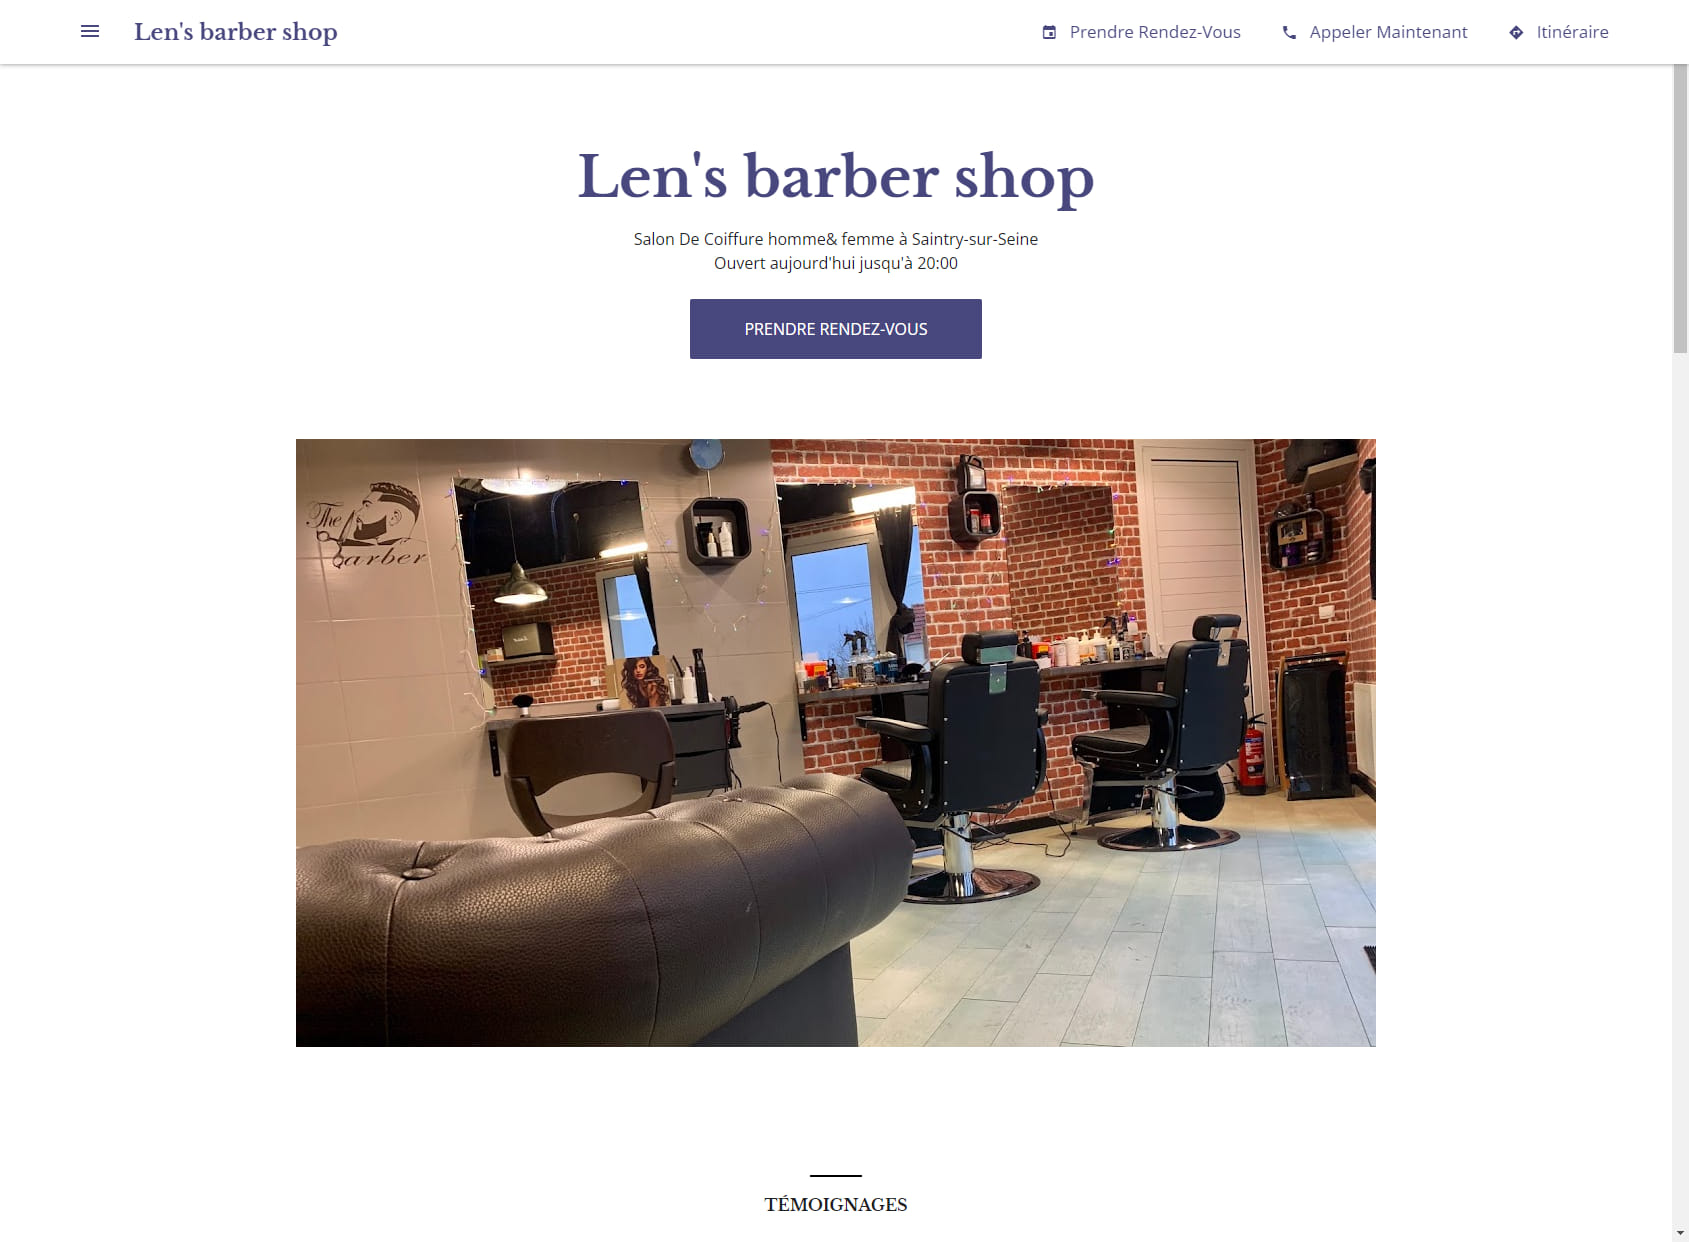 Len's barber shop